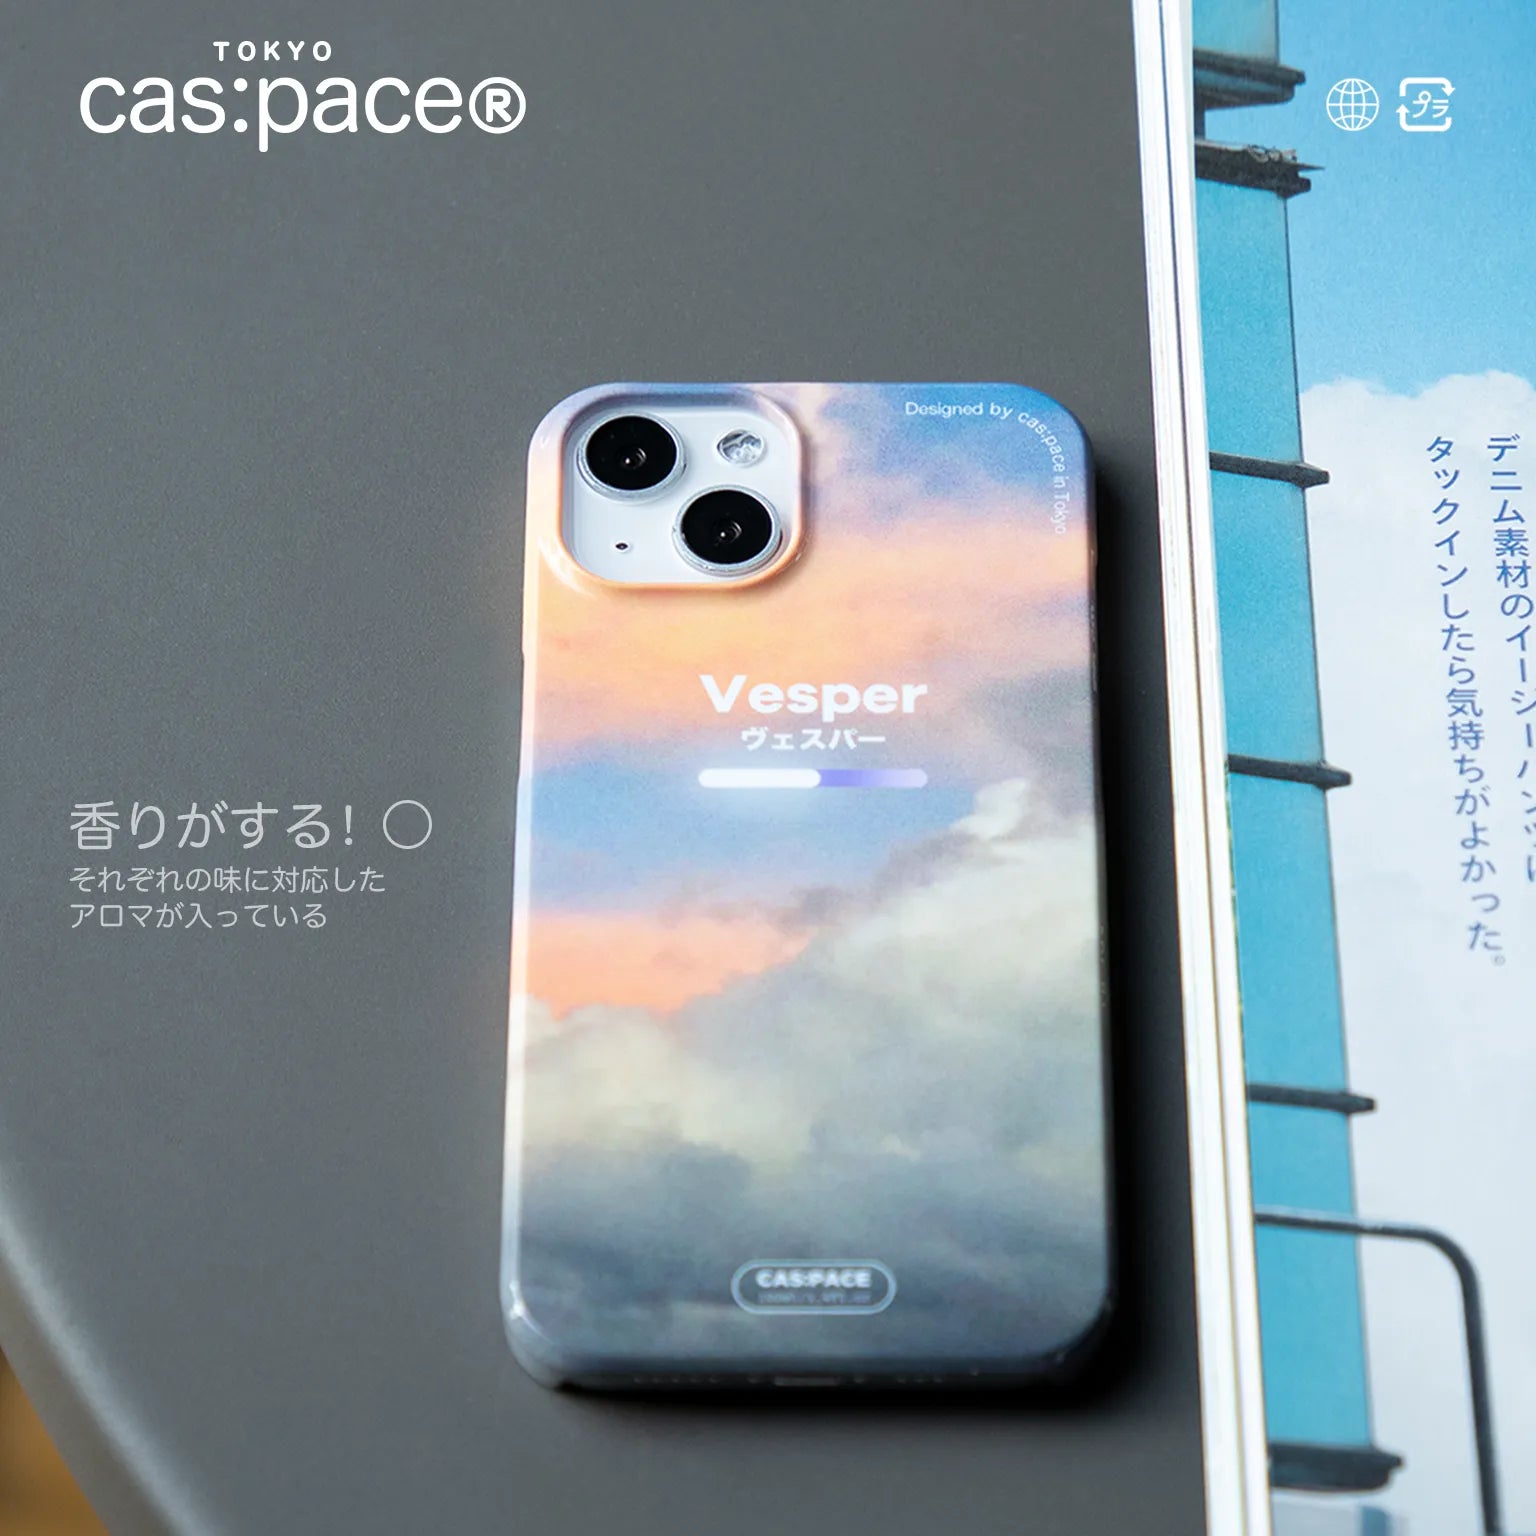 cas:pace 22S/S「vesper」携帯ケース - cas:pace 殼空間